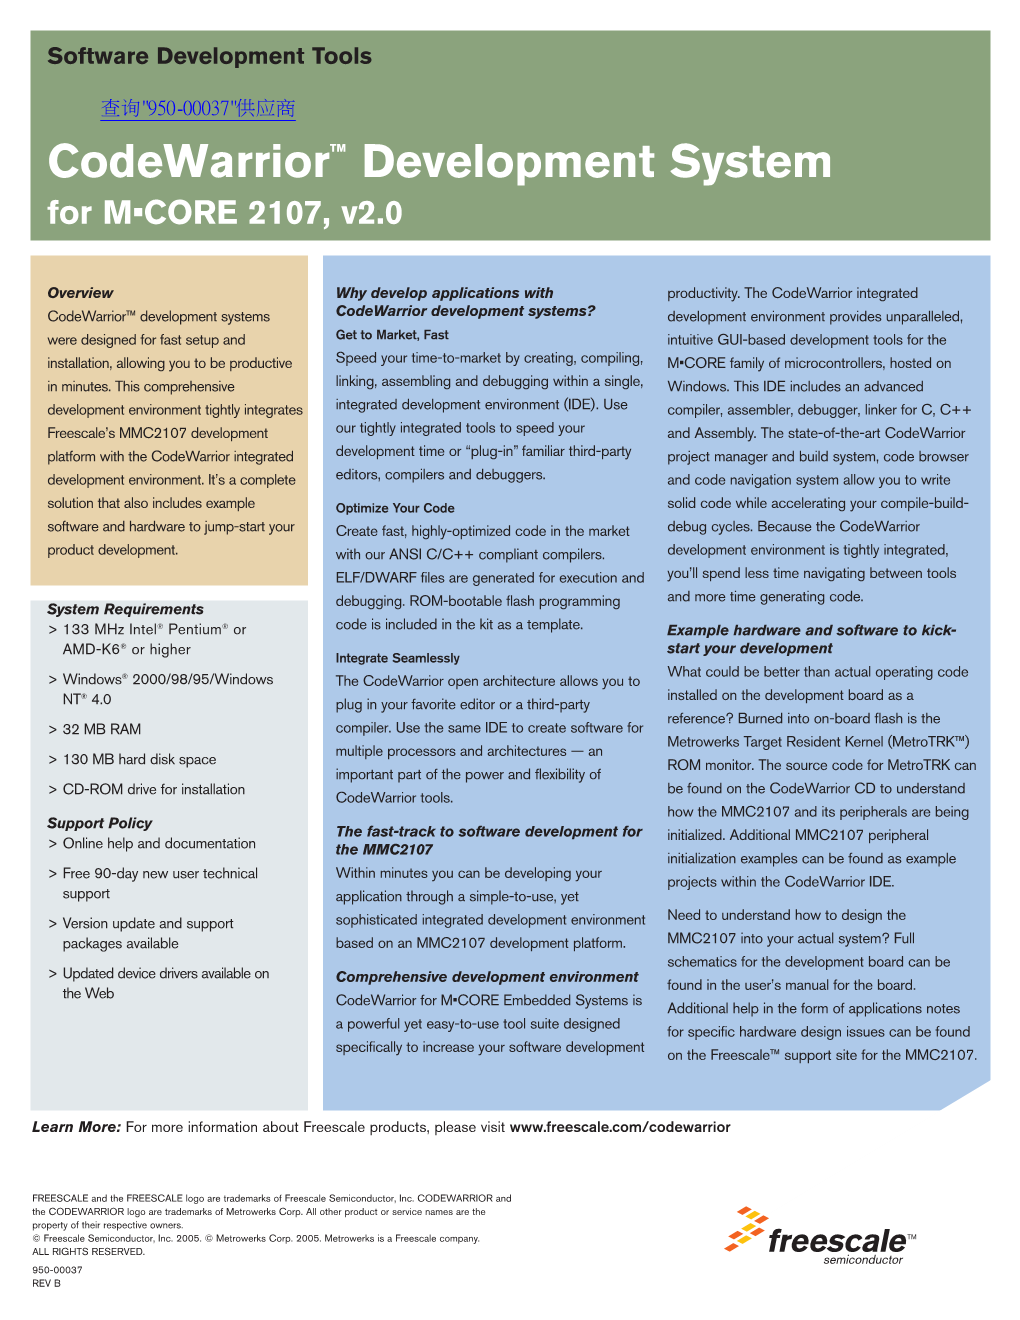 Codewarrior™ Development System for M•CORE 2107, V2.0